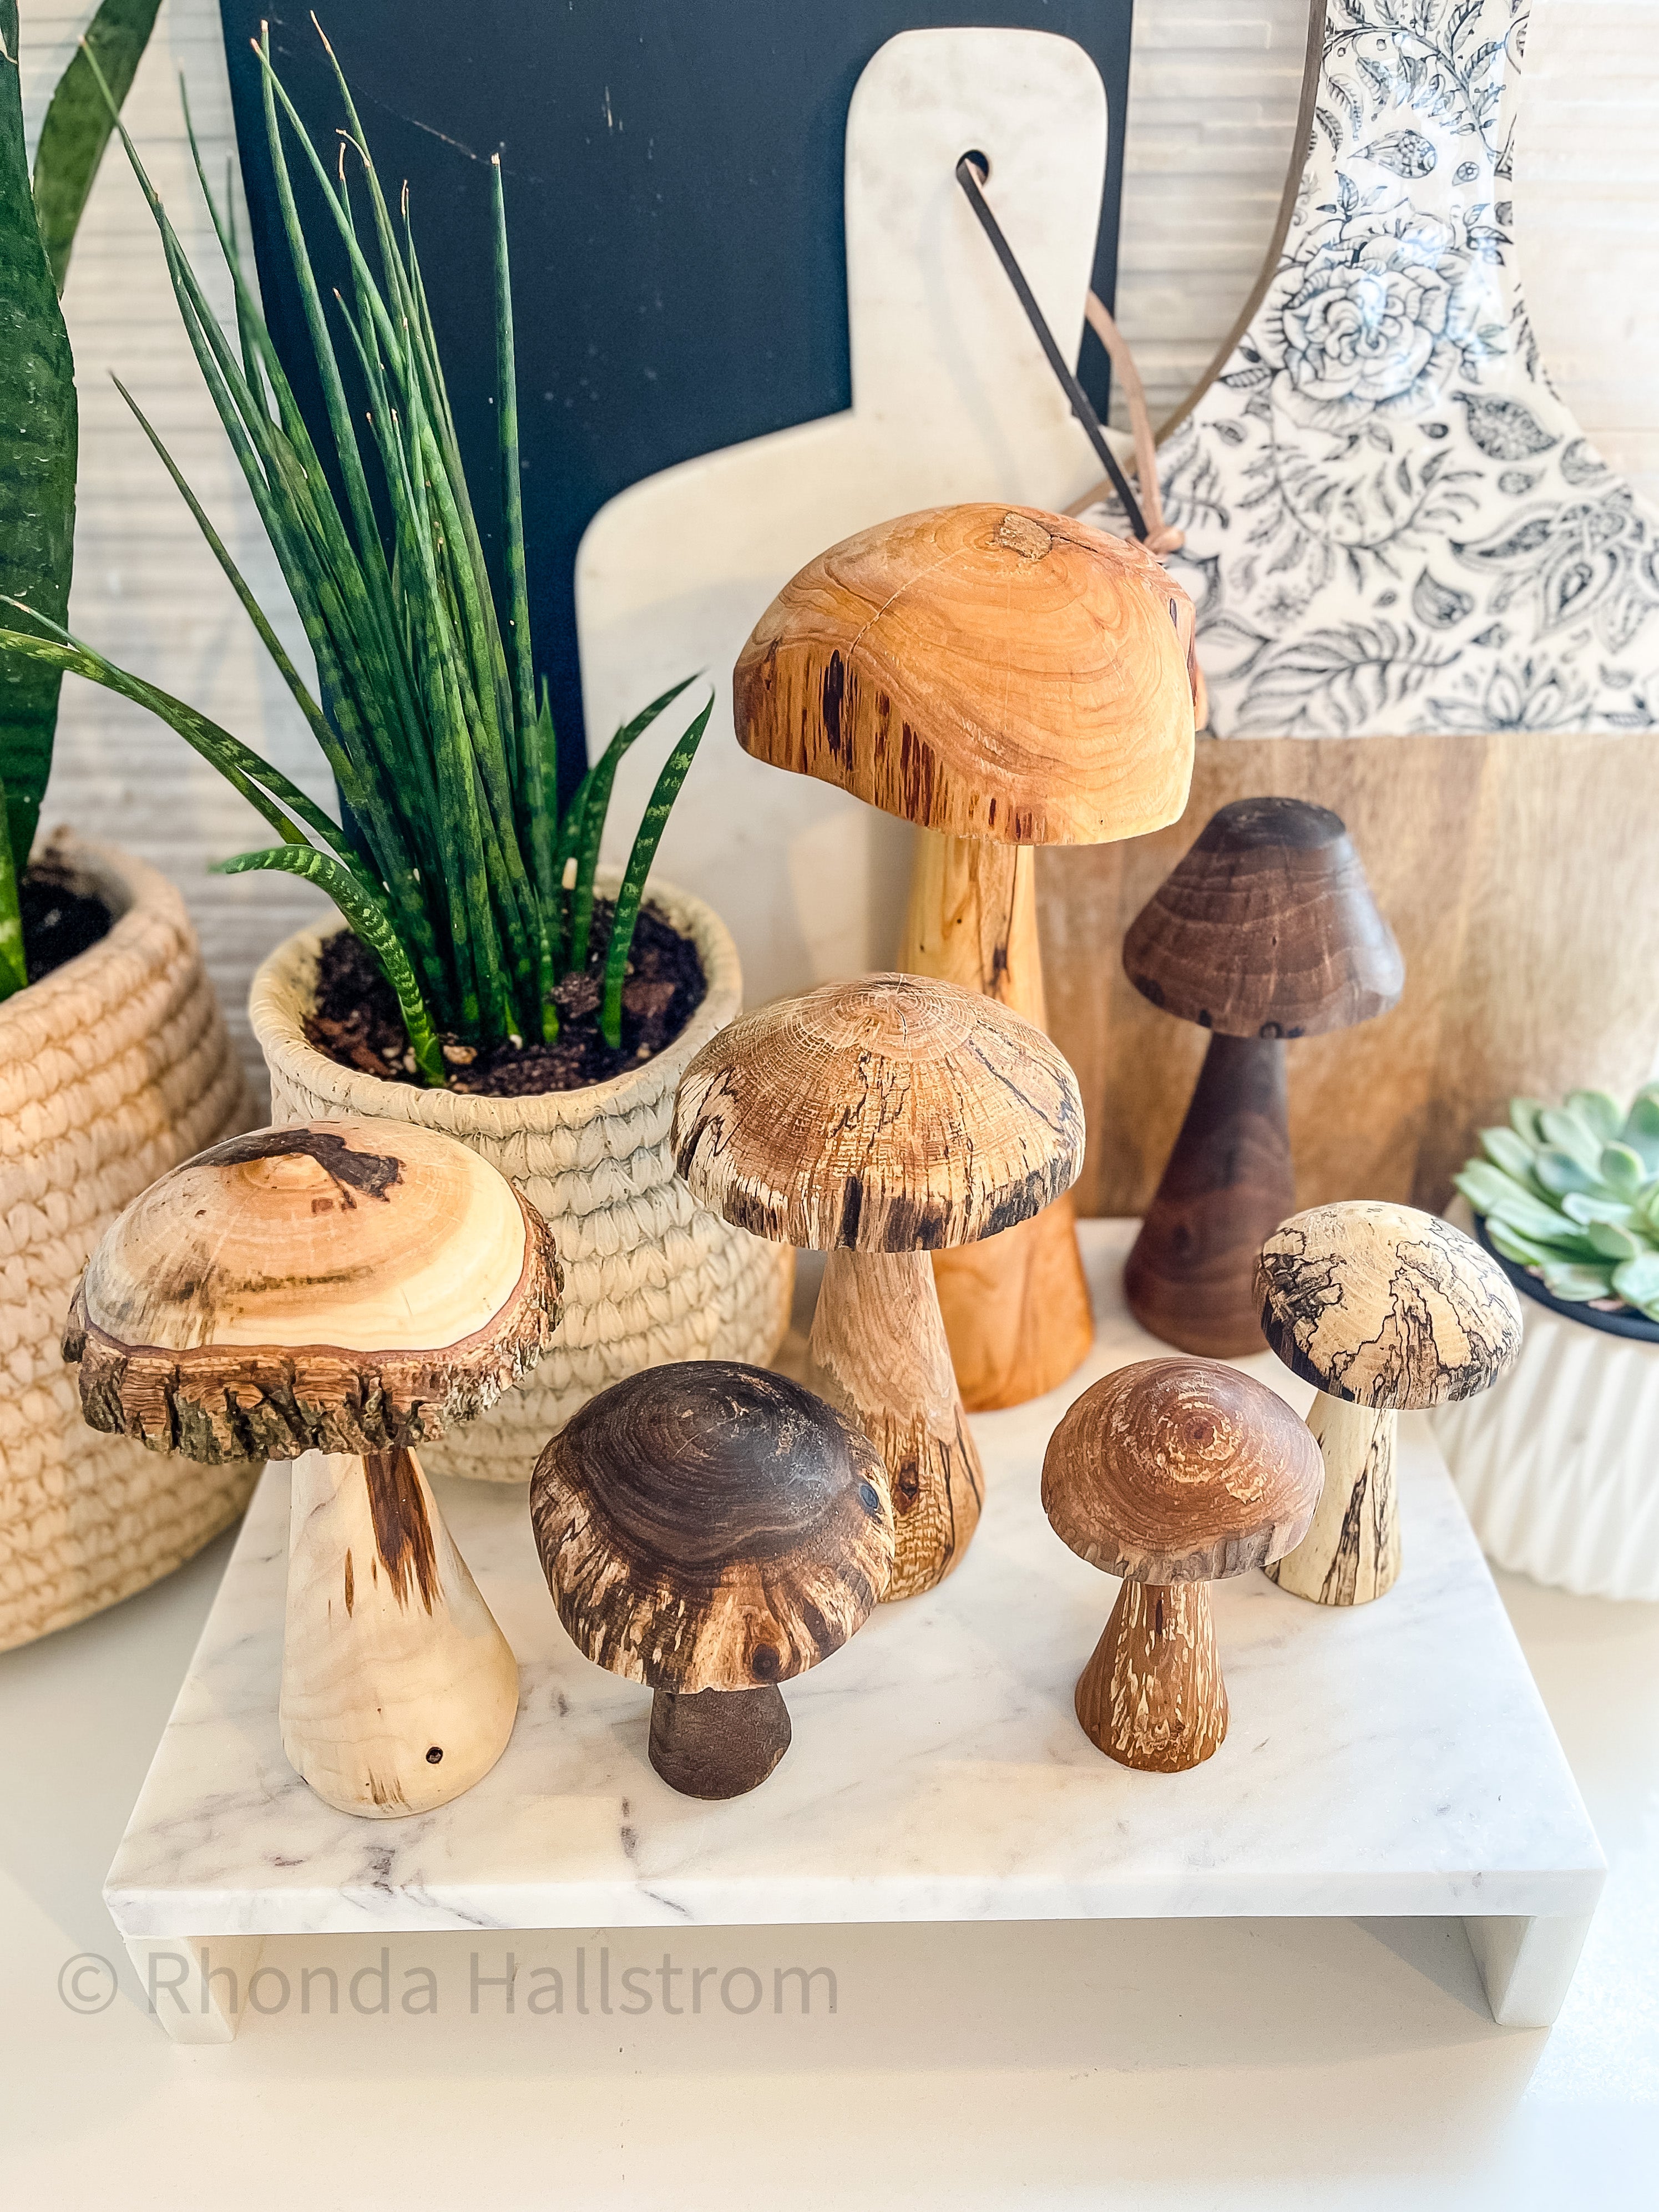 Hand-carved Wooden Mushroom –